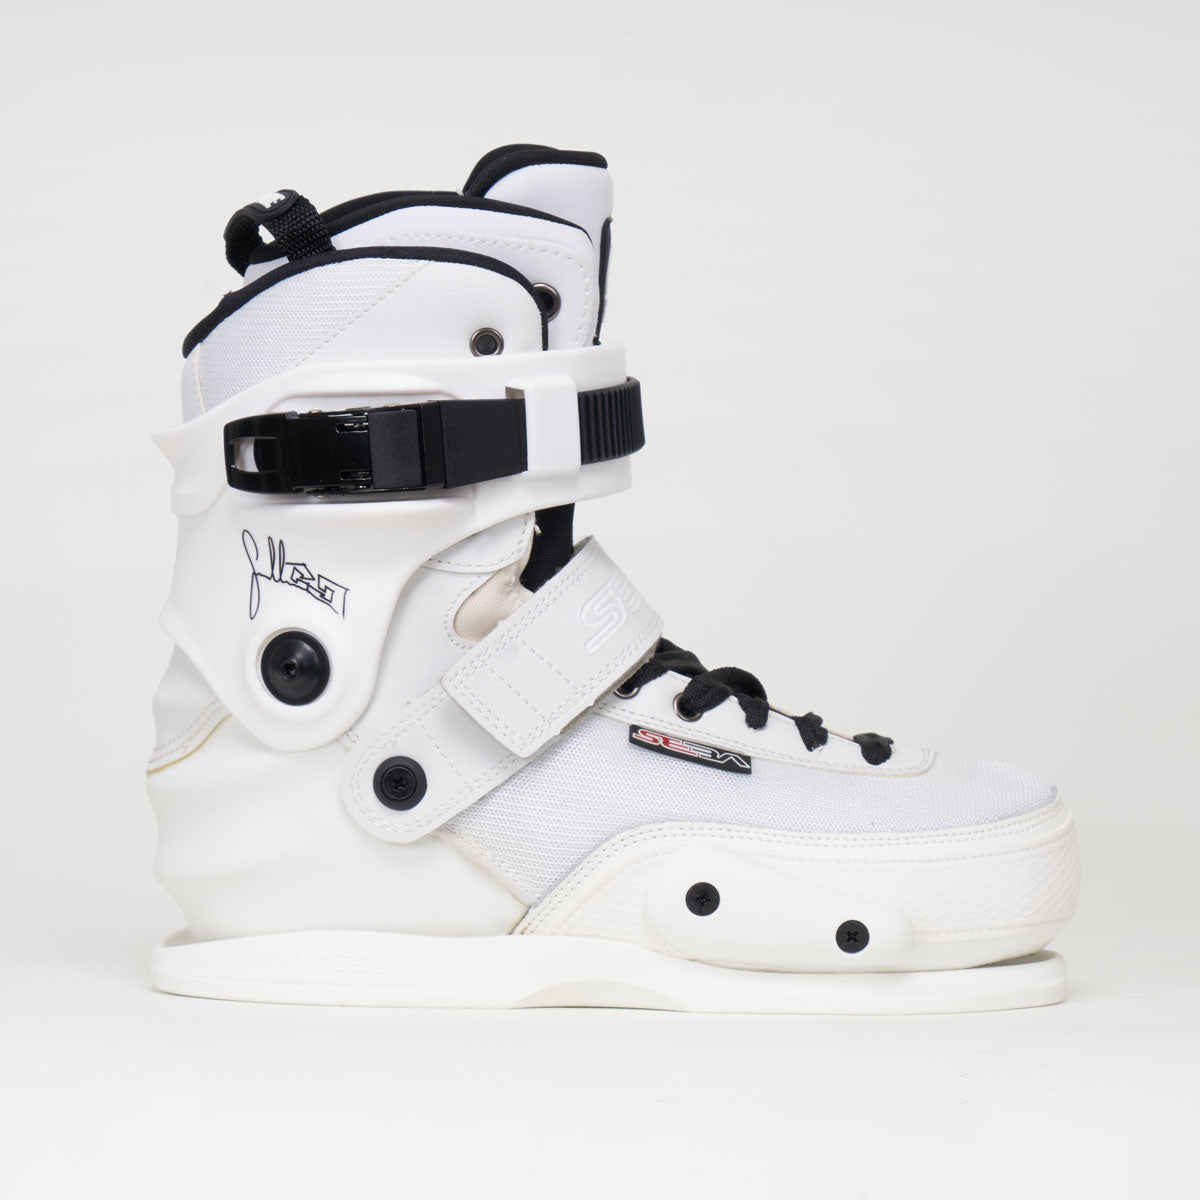 Seba CJ2 Prime White Skates (Plastic version with removable liner) - Boot Only